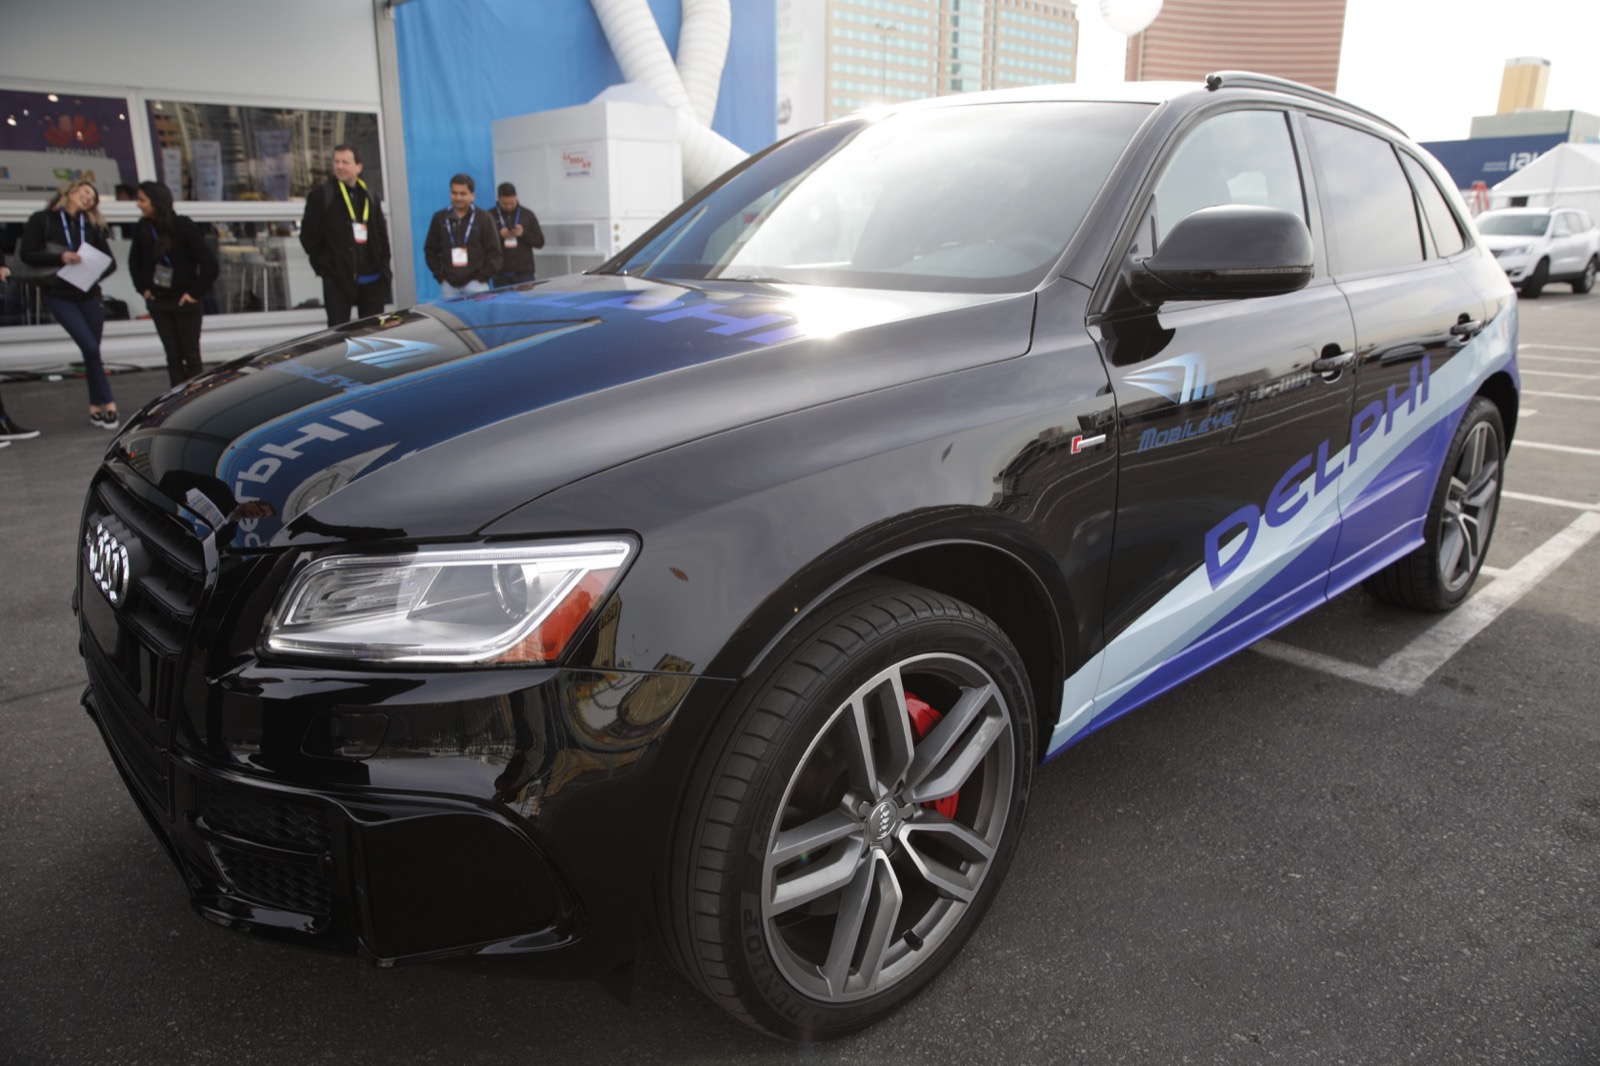 Delphi's autonomous Audi demonstration vehicle is one car testing on Nevada's roads.